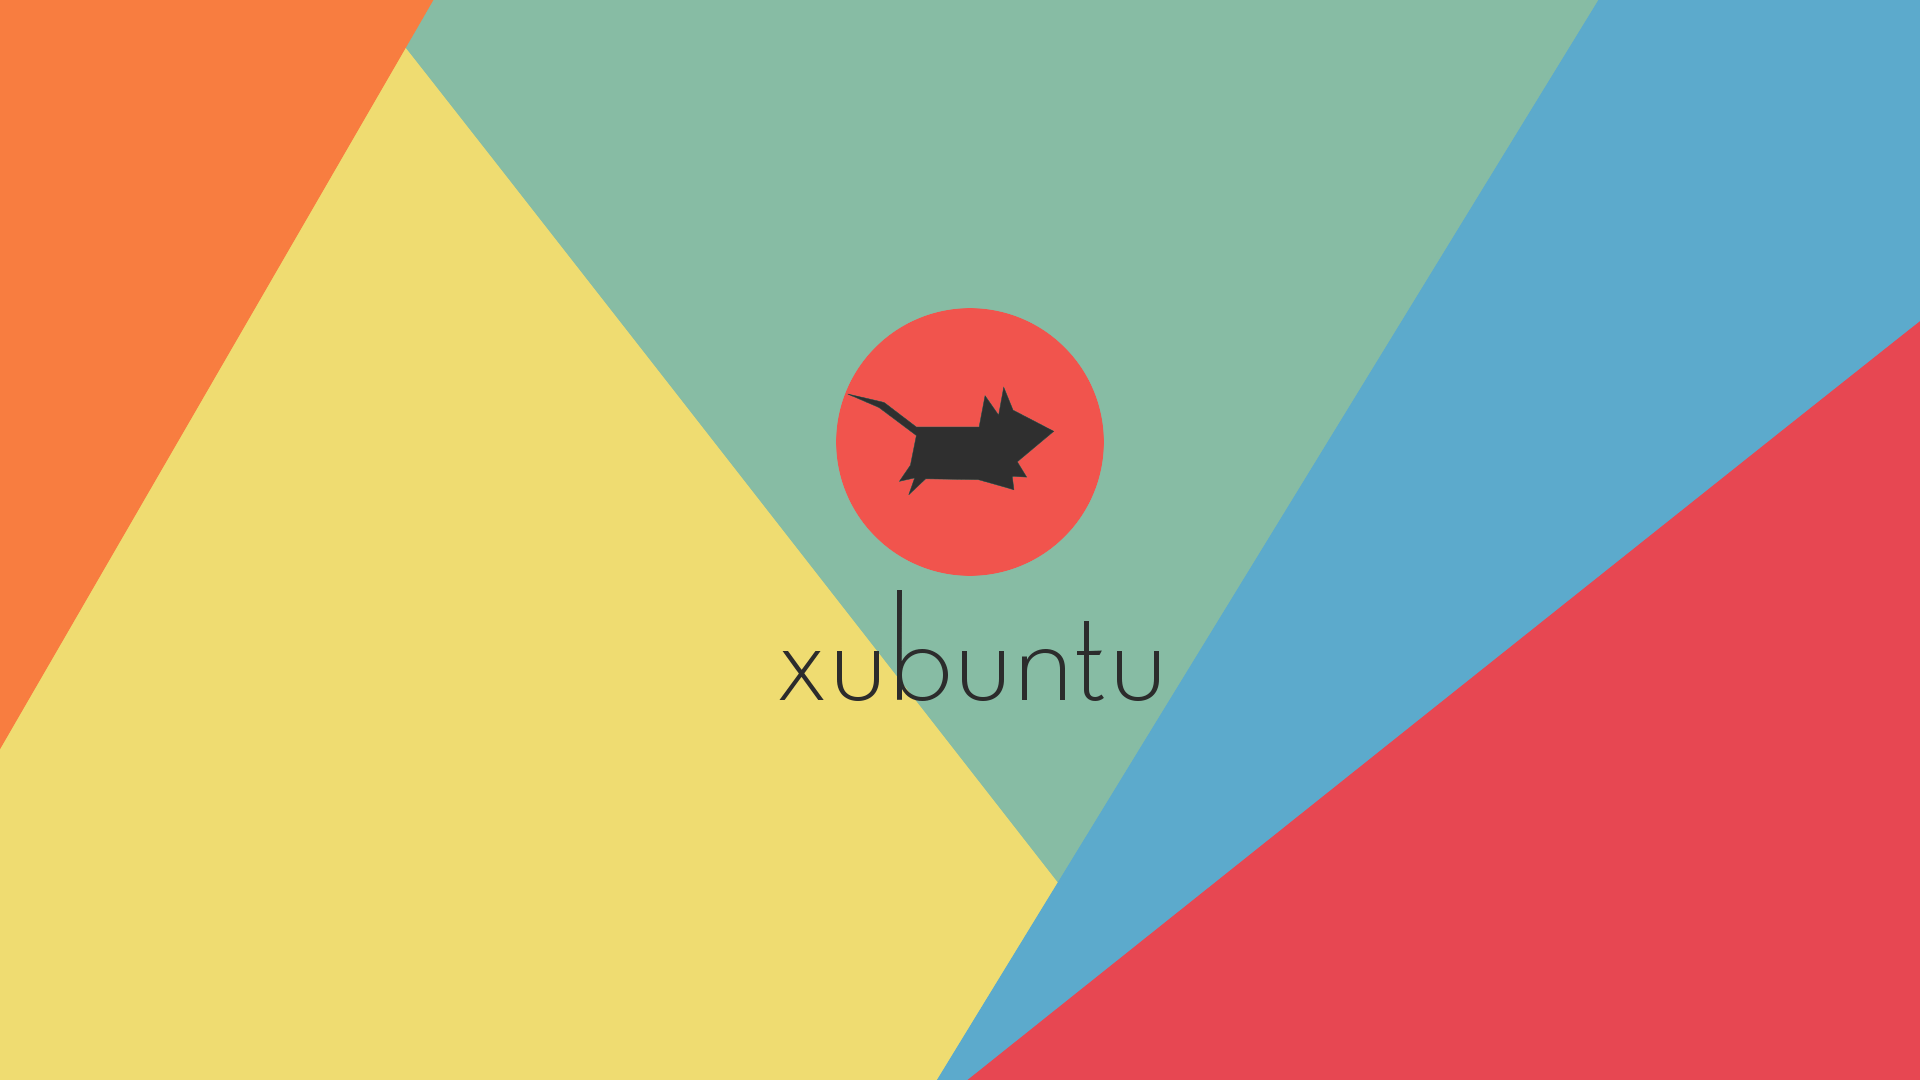 Xfce, Xubuntu, Linux, Material style, Flatdesign, Ubuntu